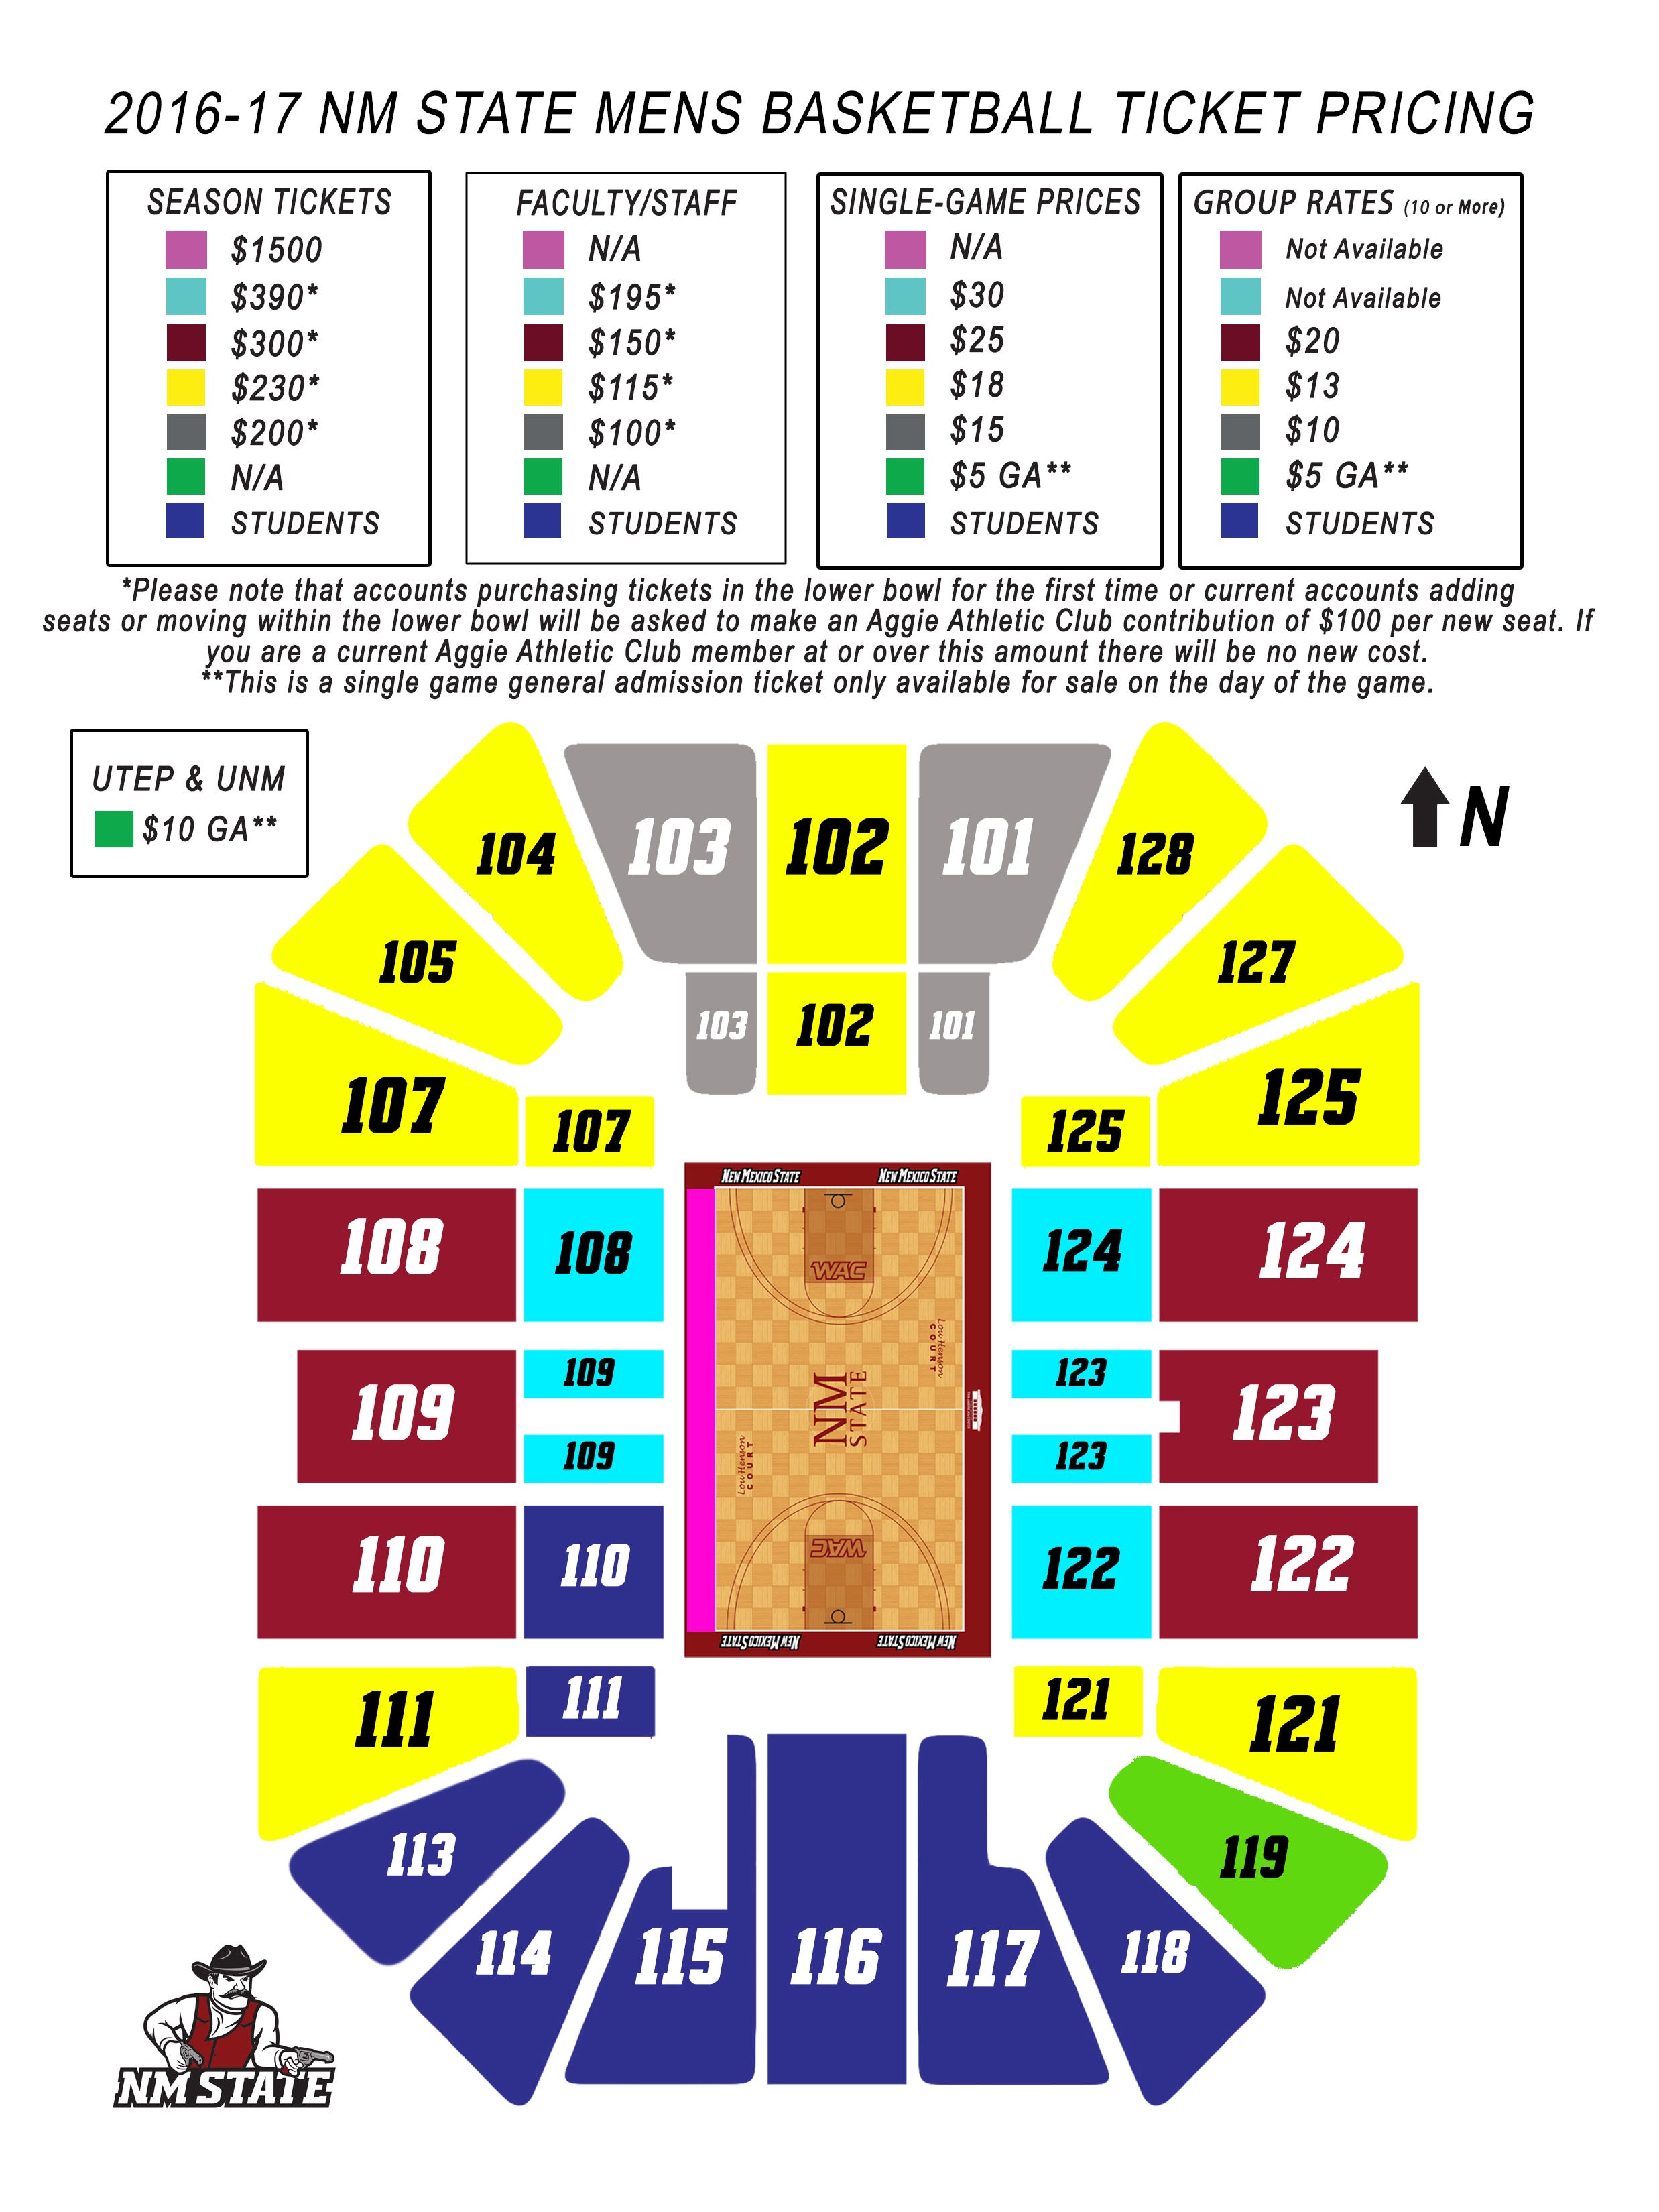 Pan Am Las Cruces Seating Chart